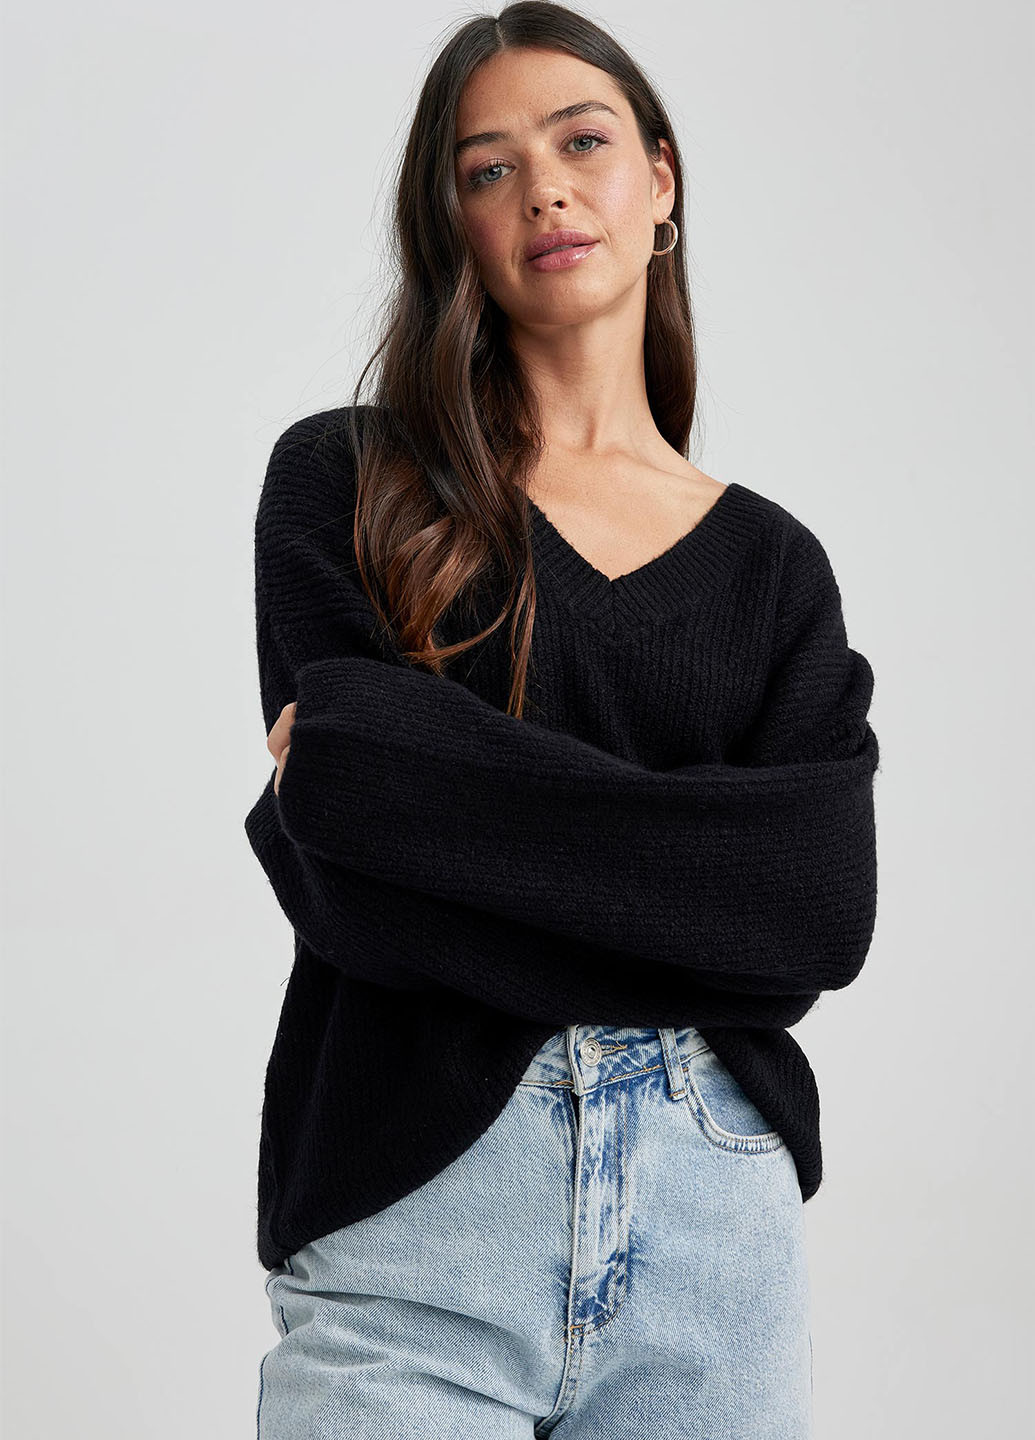 Чорний зимовий пуловер пуловер DeFacto